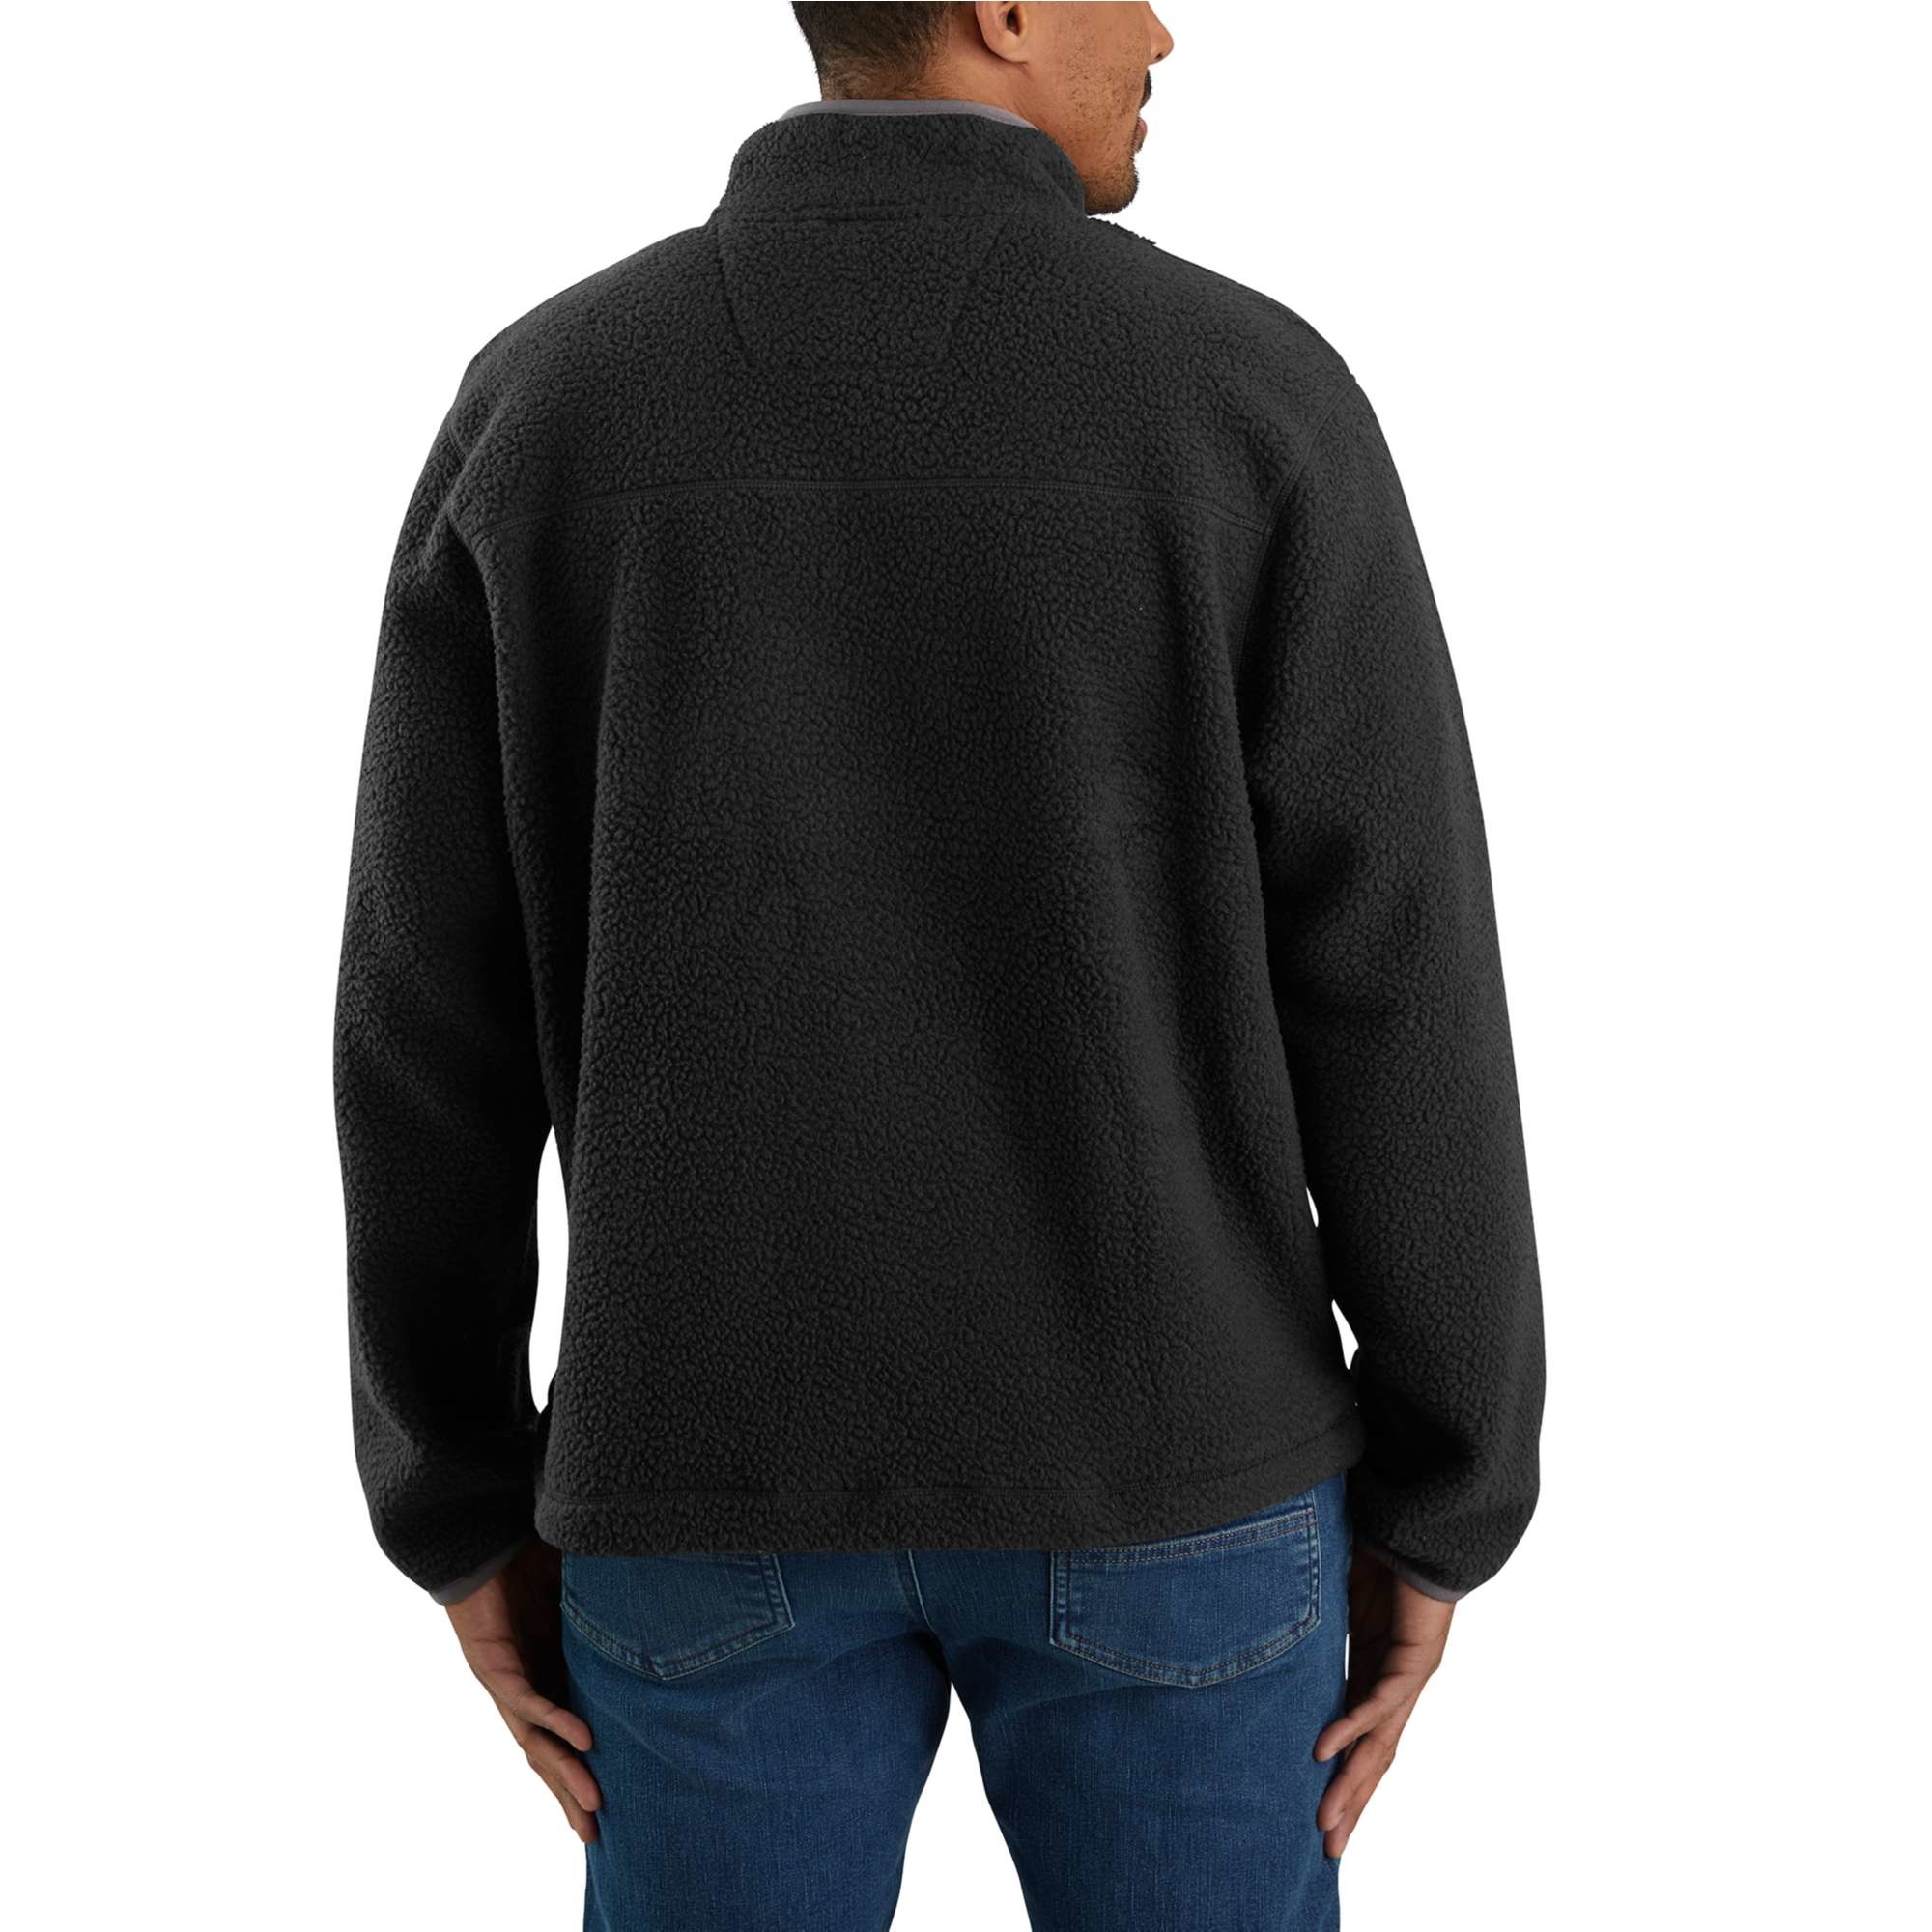 Carhartt Men's Fleece Snap Front Jacket - Traditions Clothing & Gift Shop